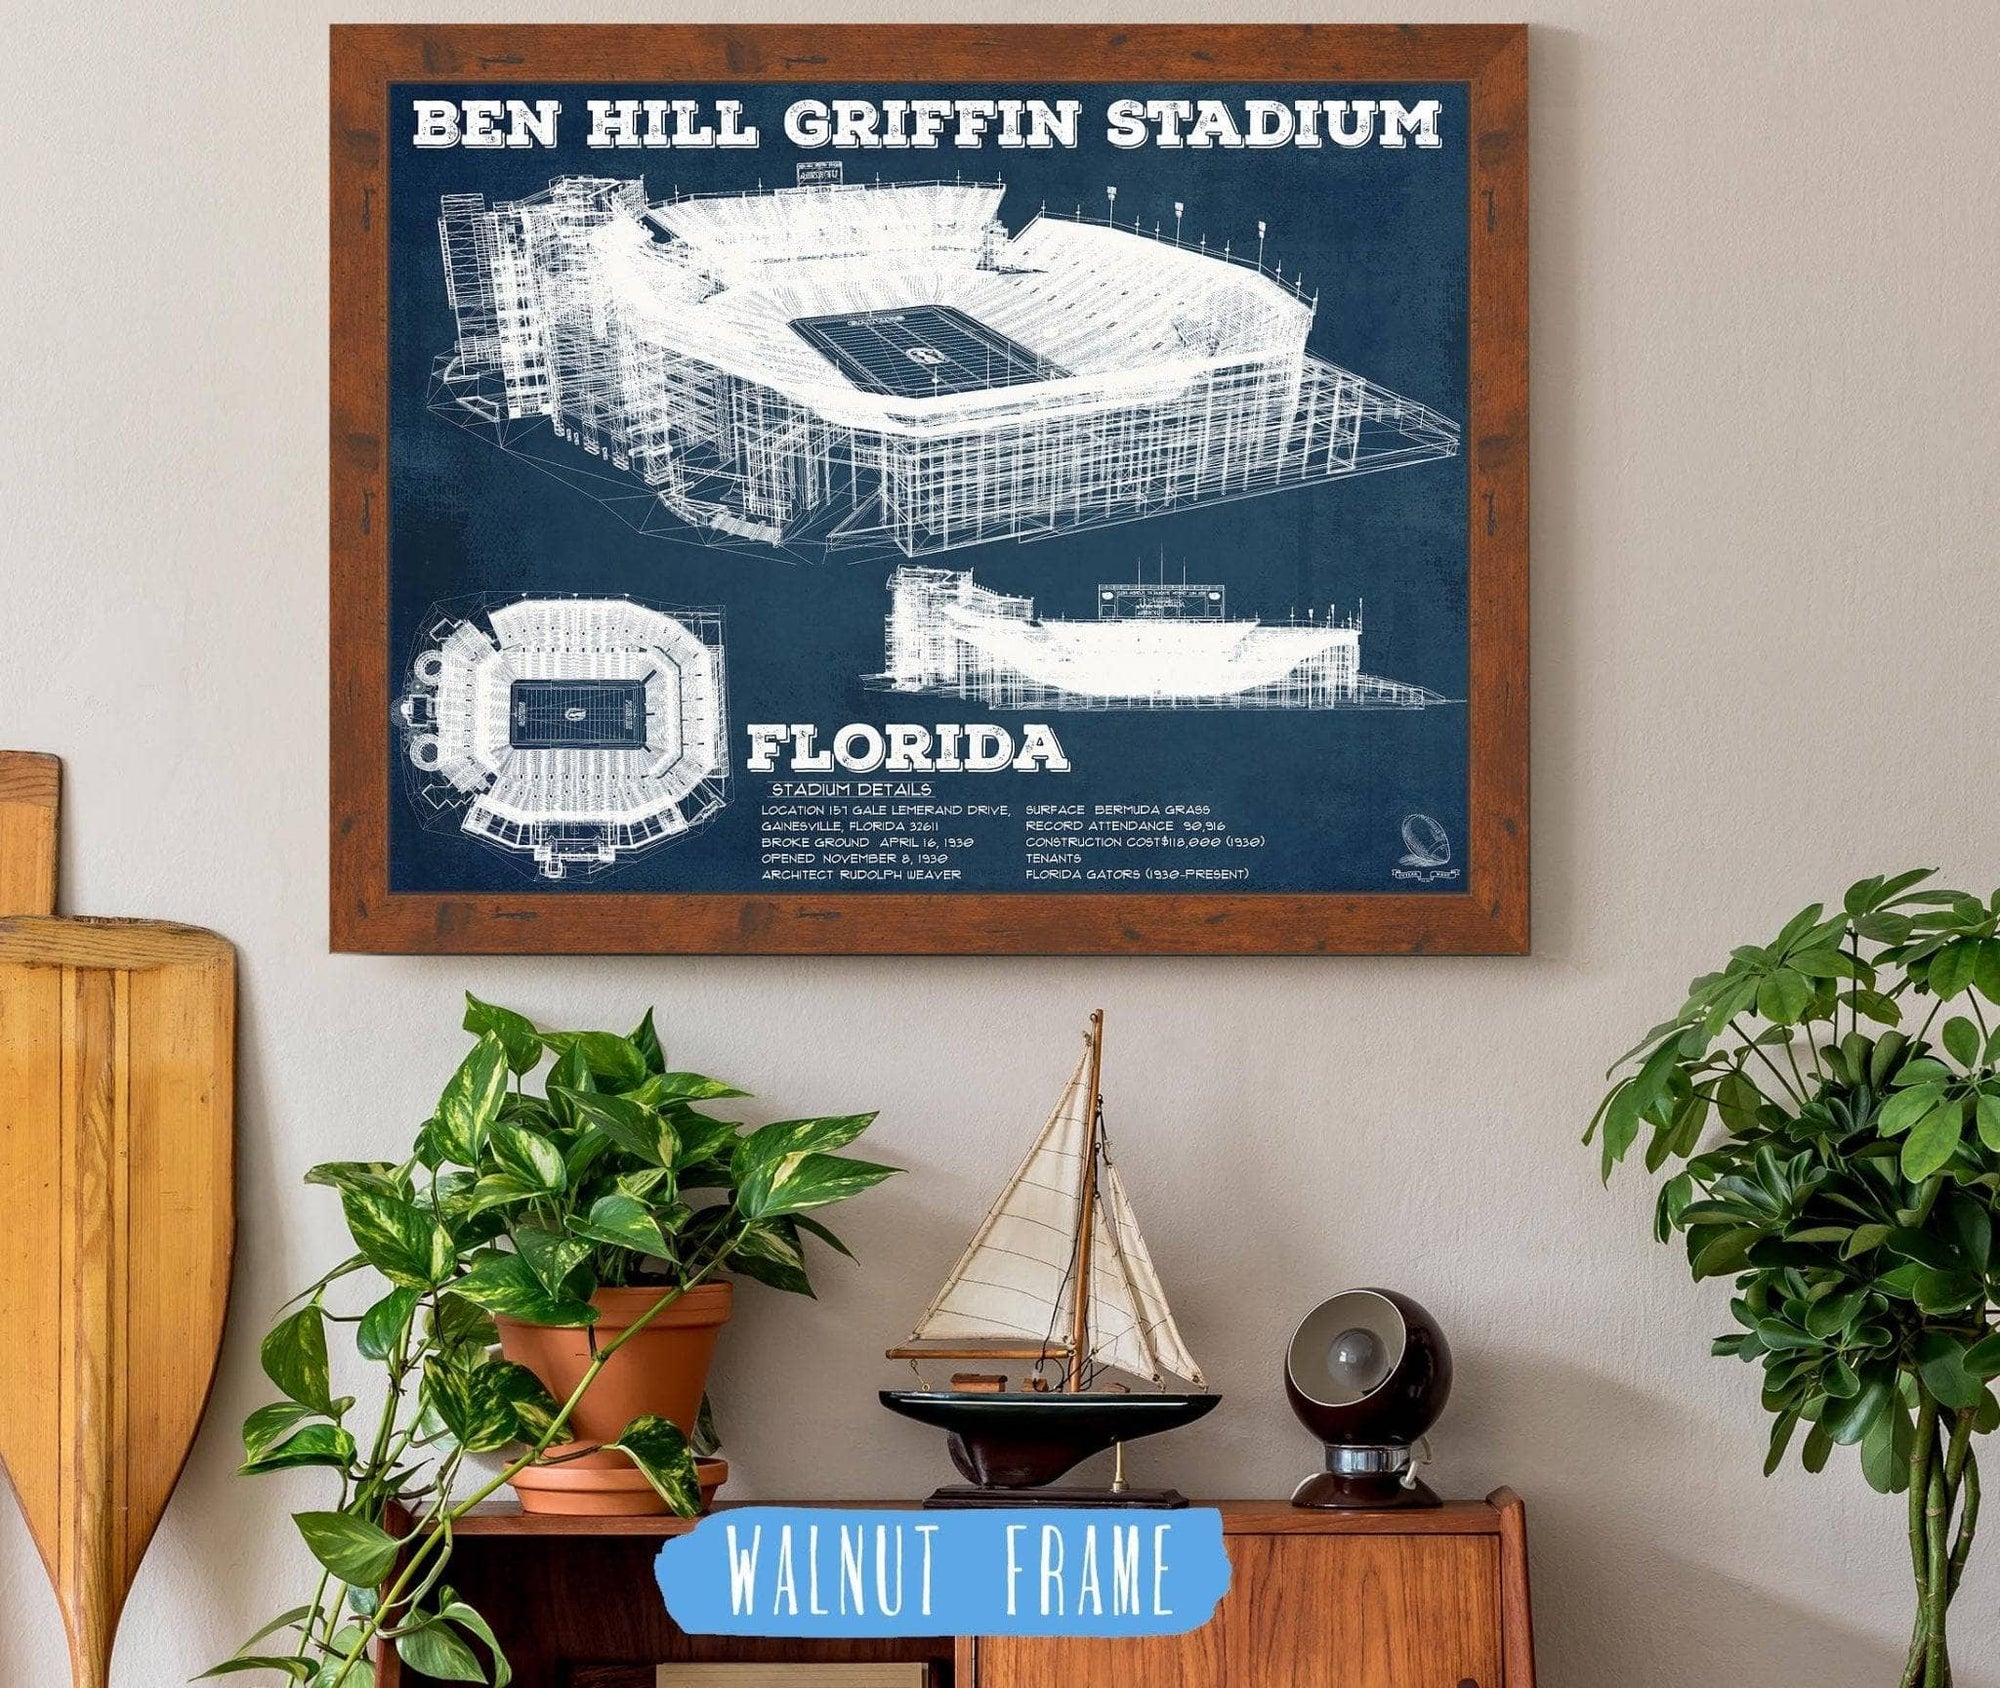 Cutler West Best Selling Collection 14" x 11" / Walnut Frame Ben Hill Griffin Stadium Art - University of Florida Gators Vintage Stadium & Blueprint Art Print 736879125_60158